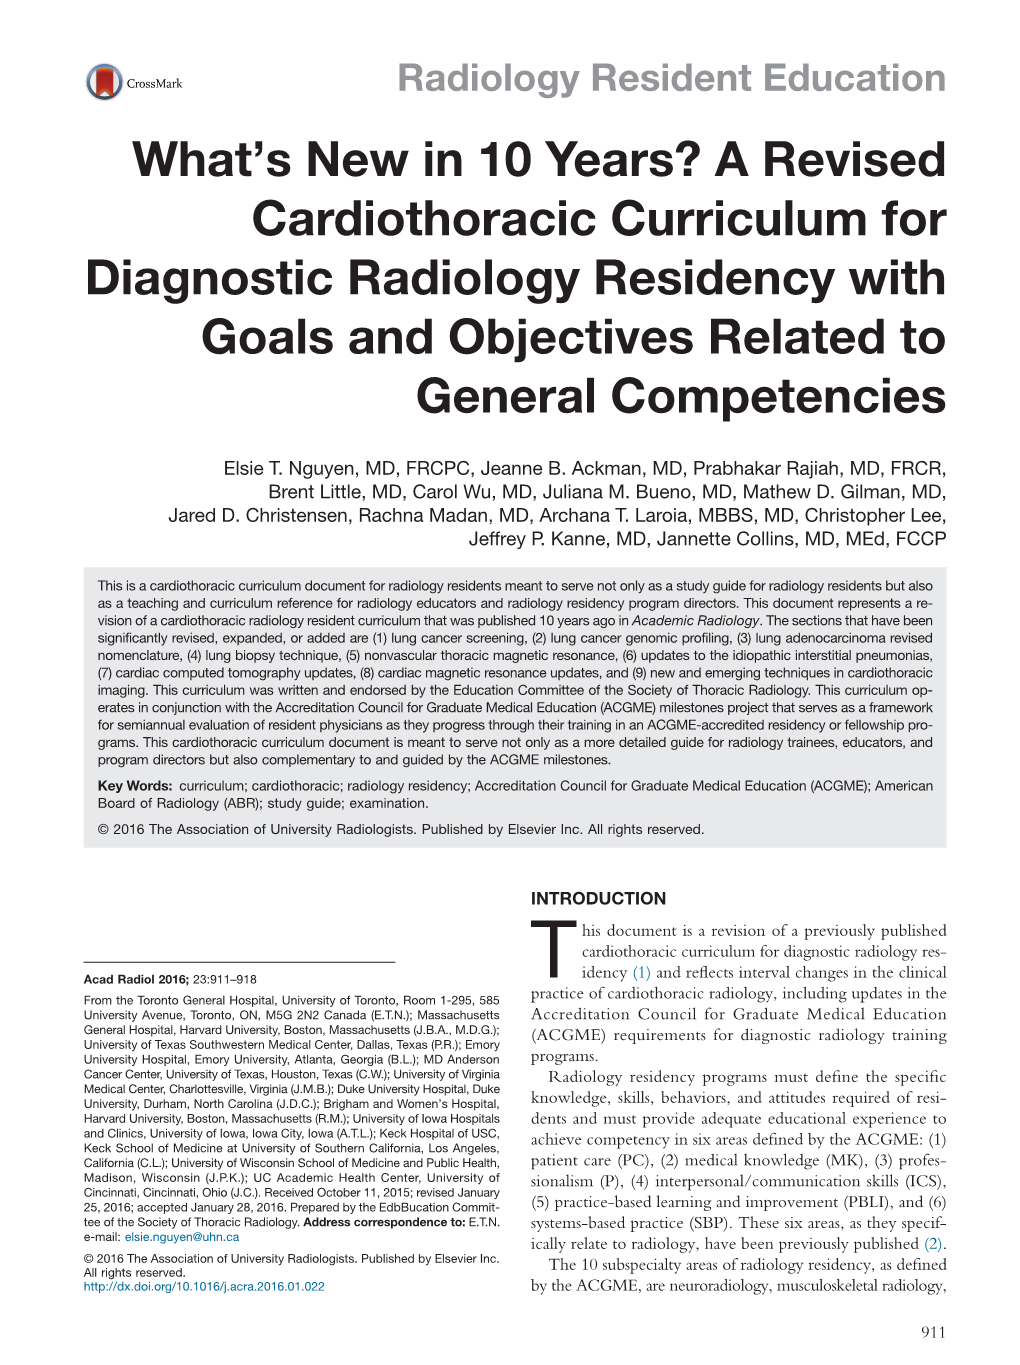 Download the Cardiothoracic Curriculum for Diagnostic